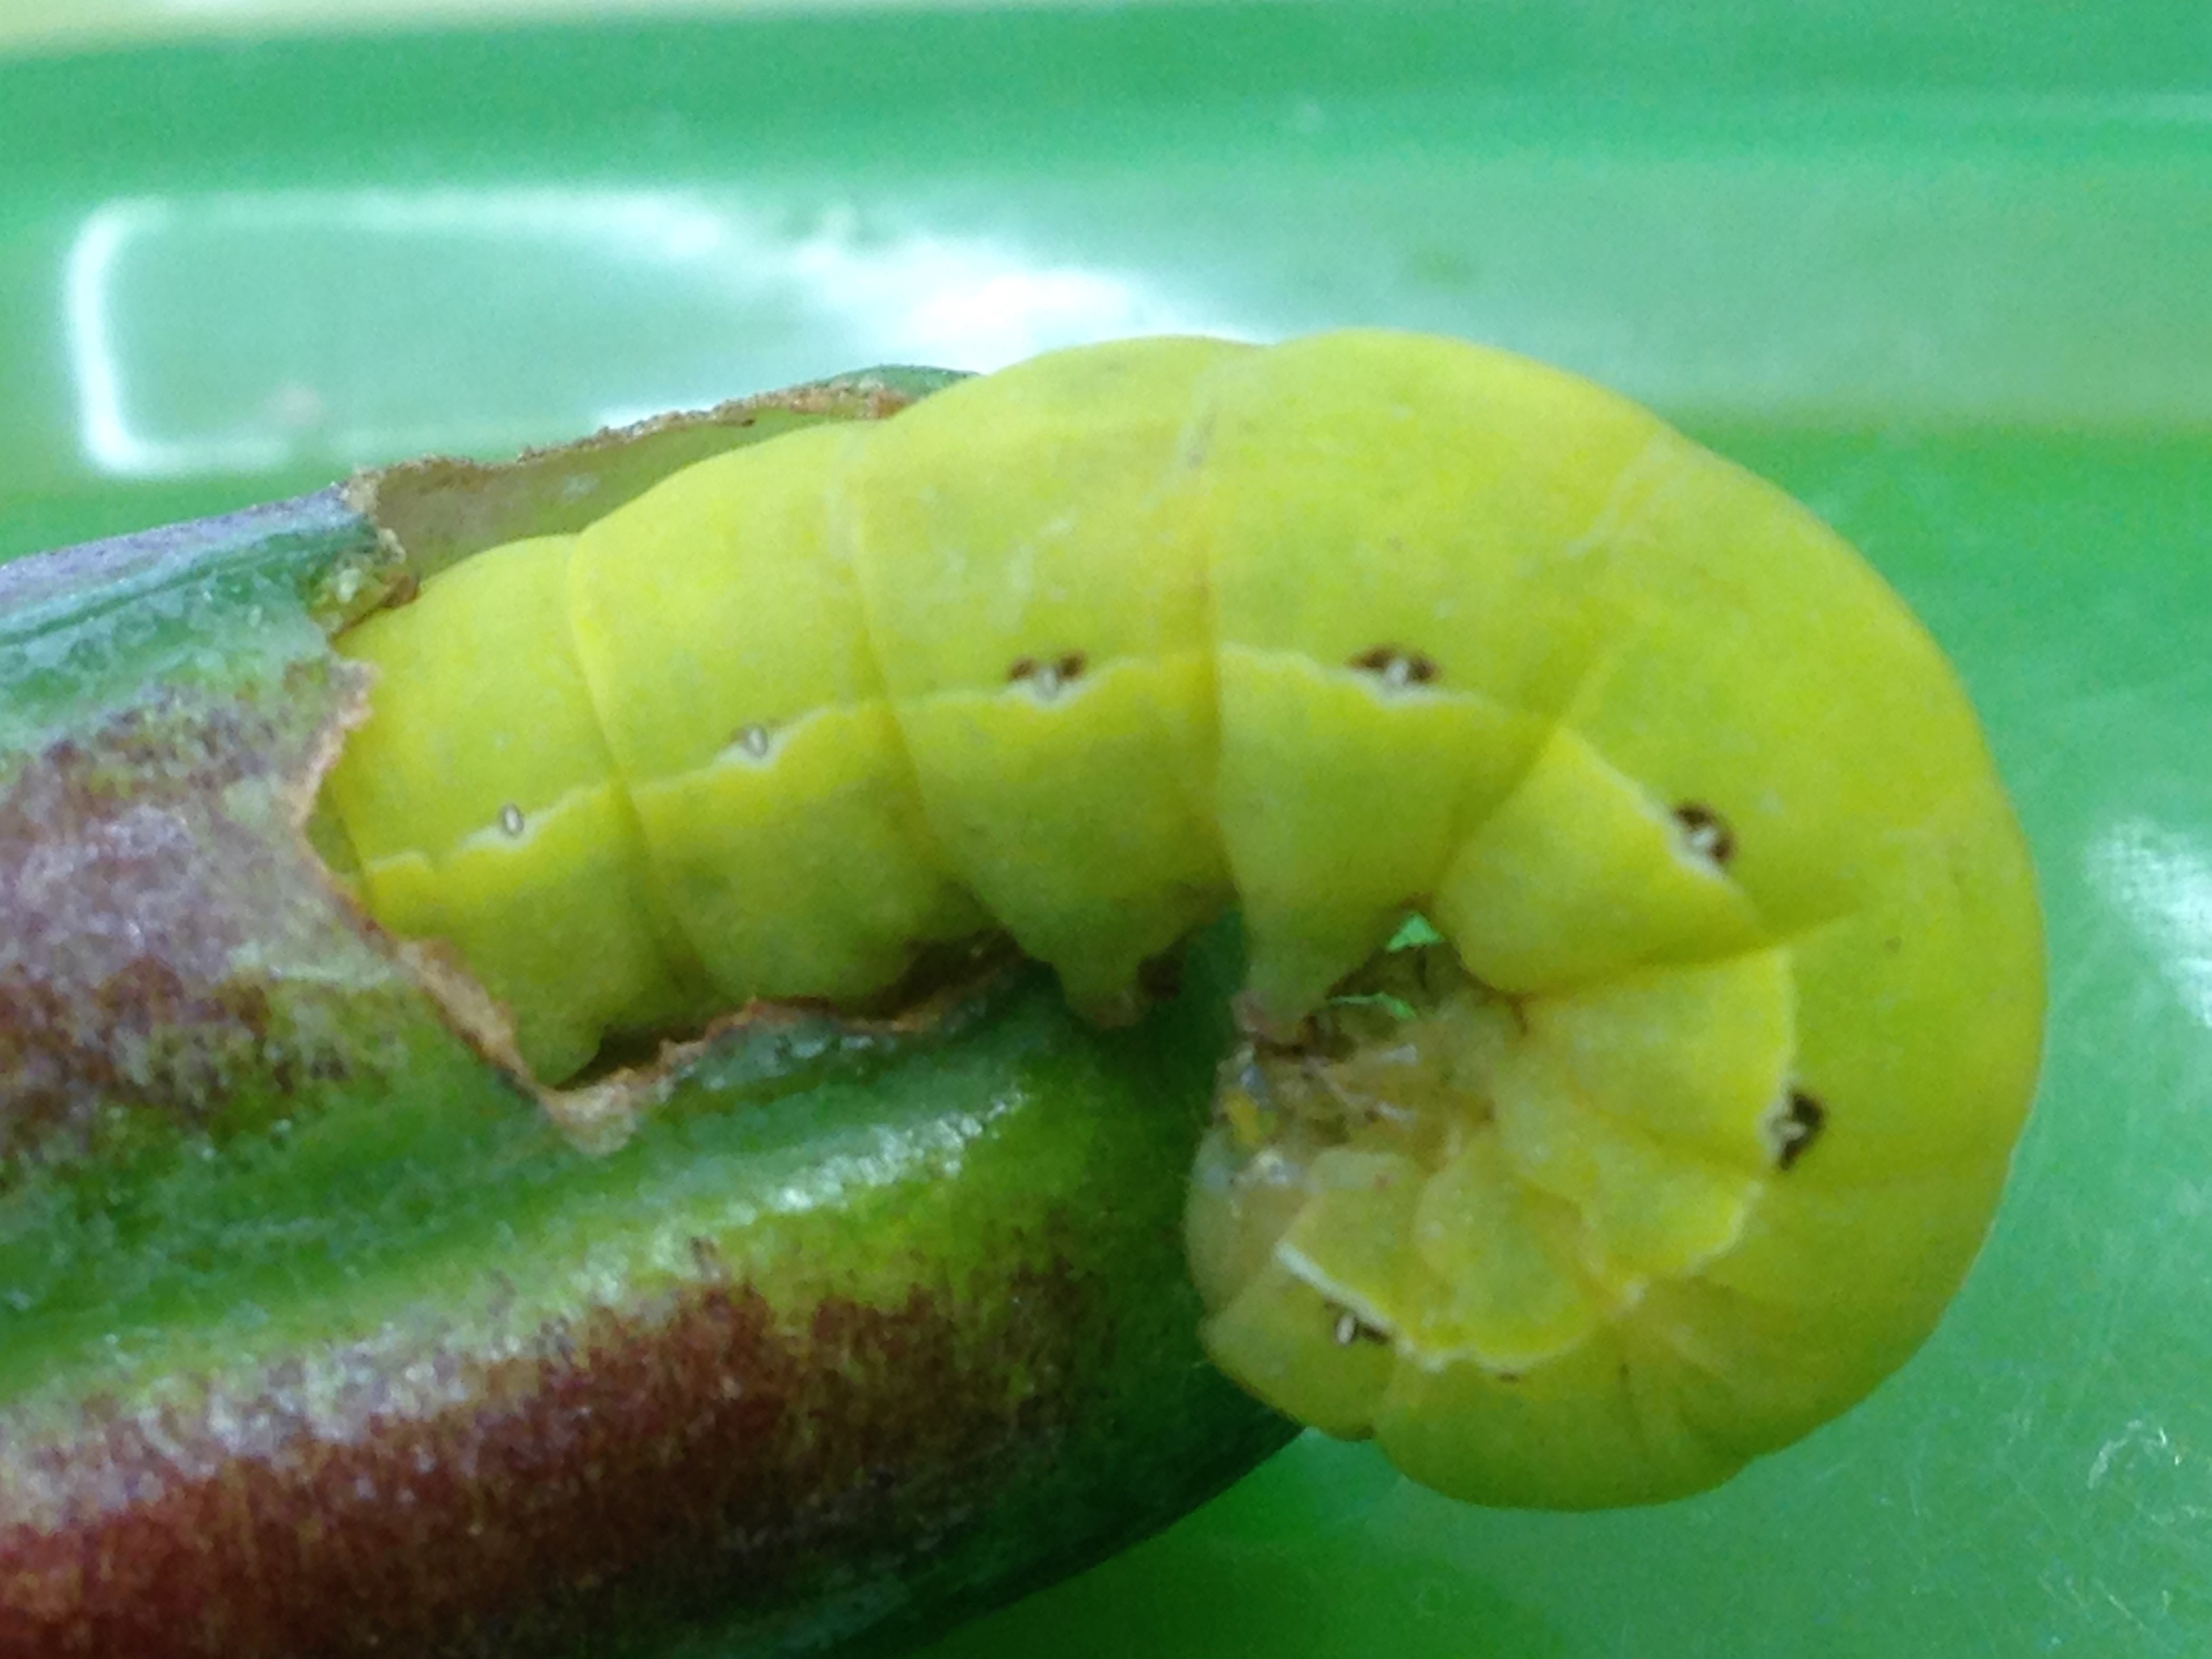 NaturePlus: Green caterpillar